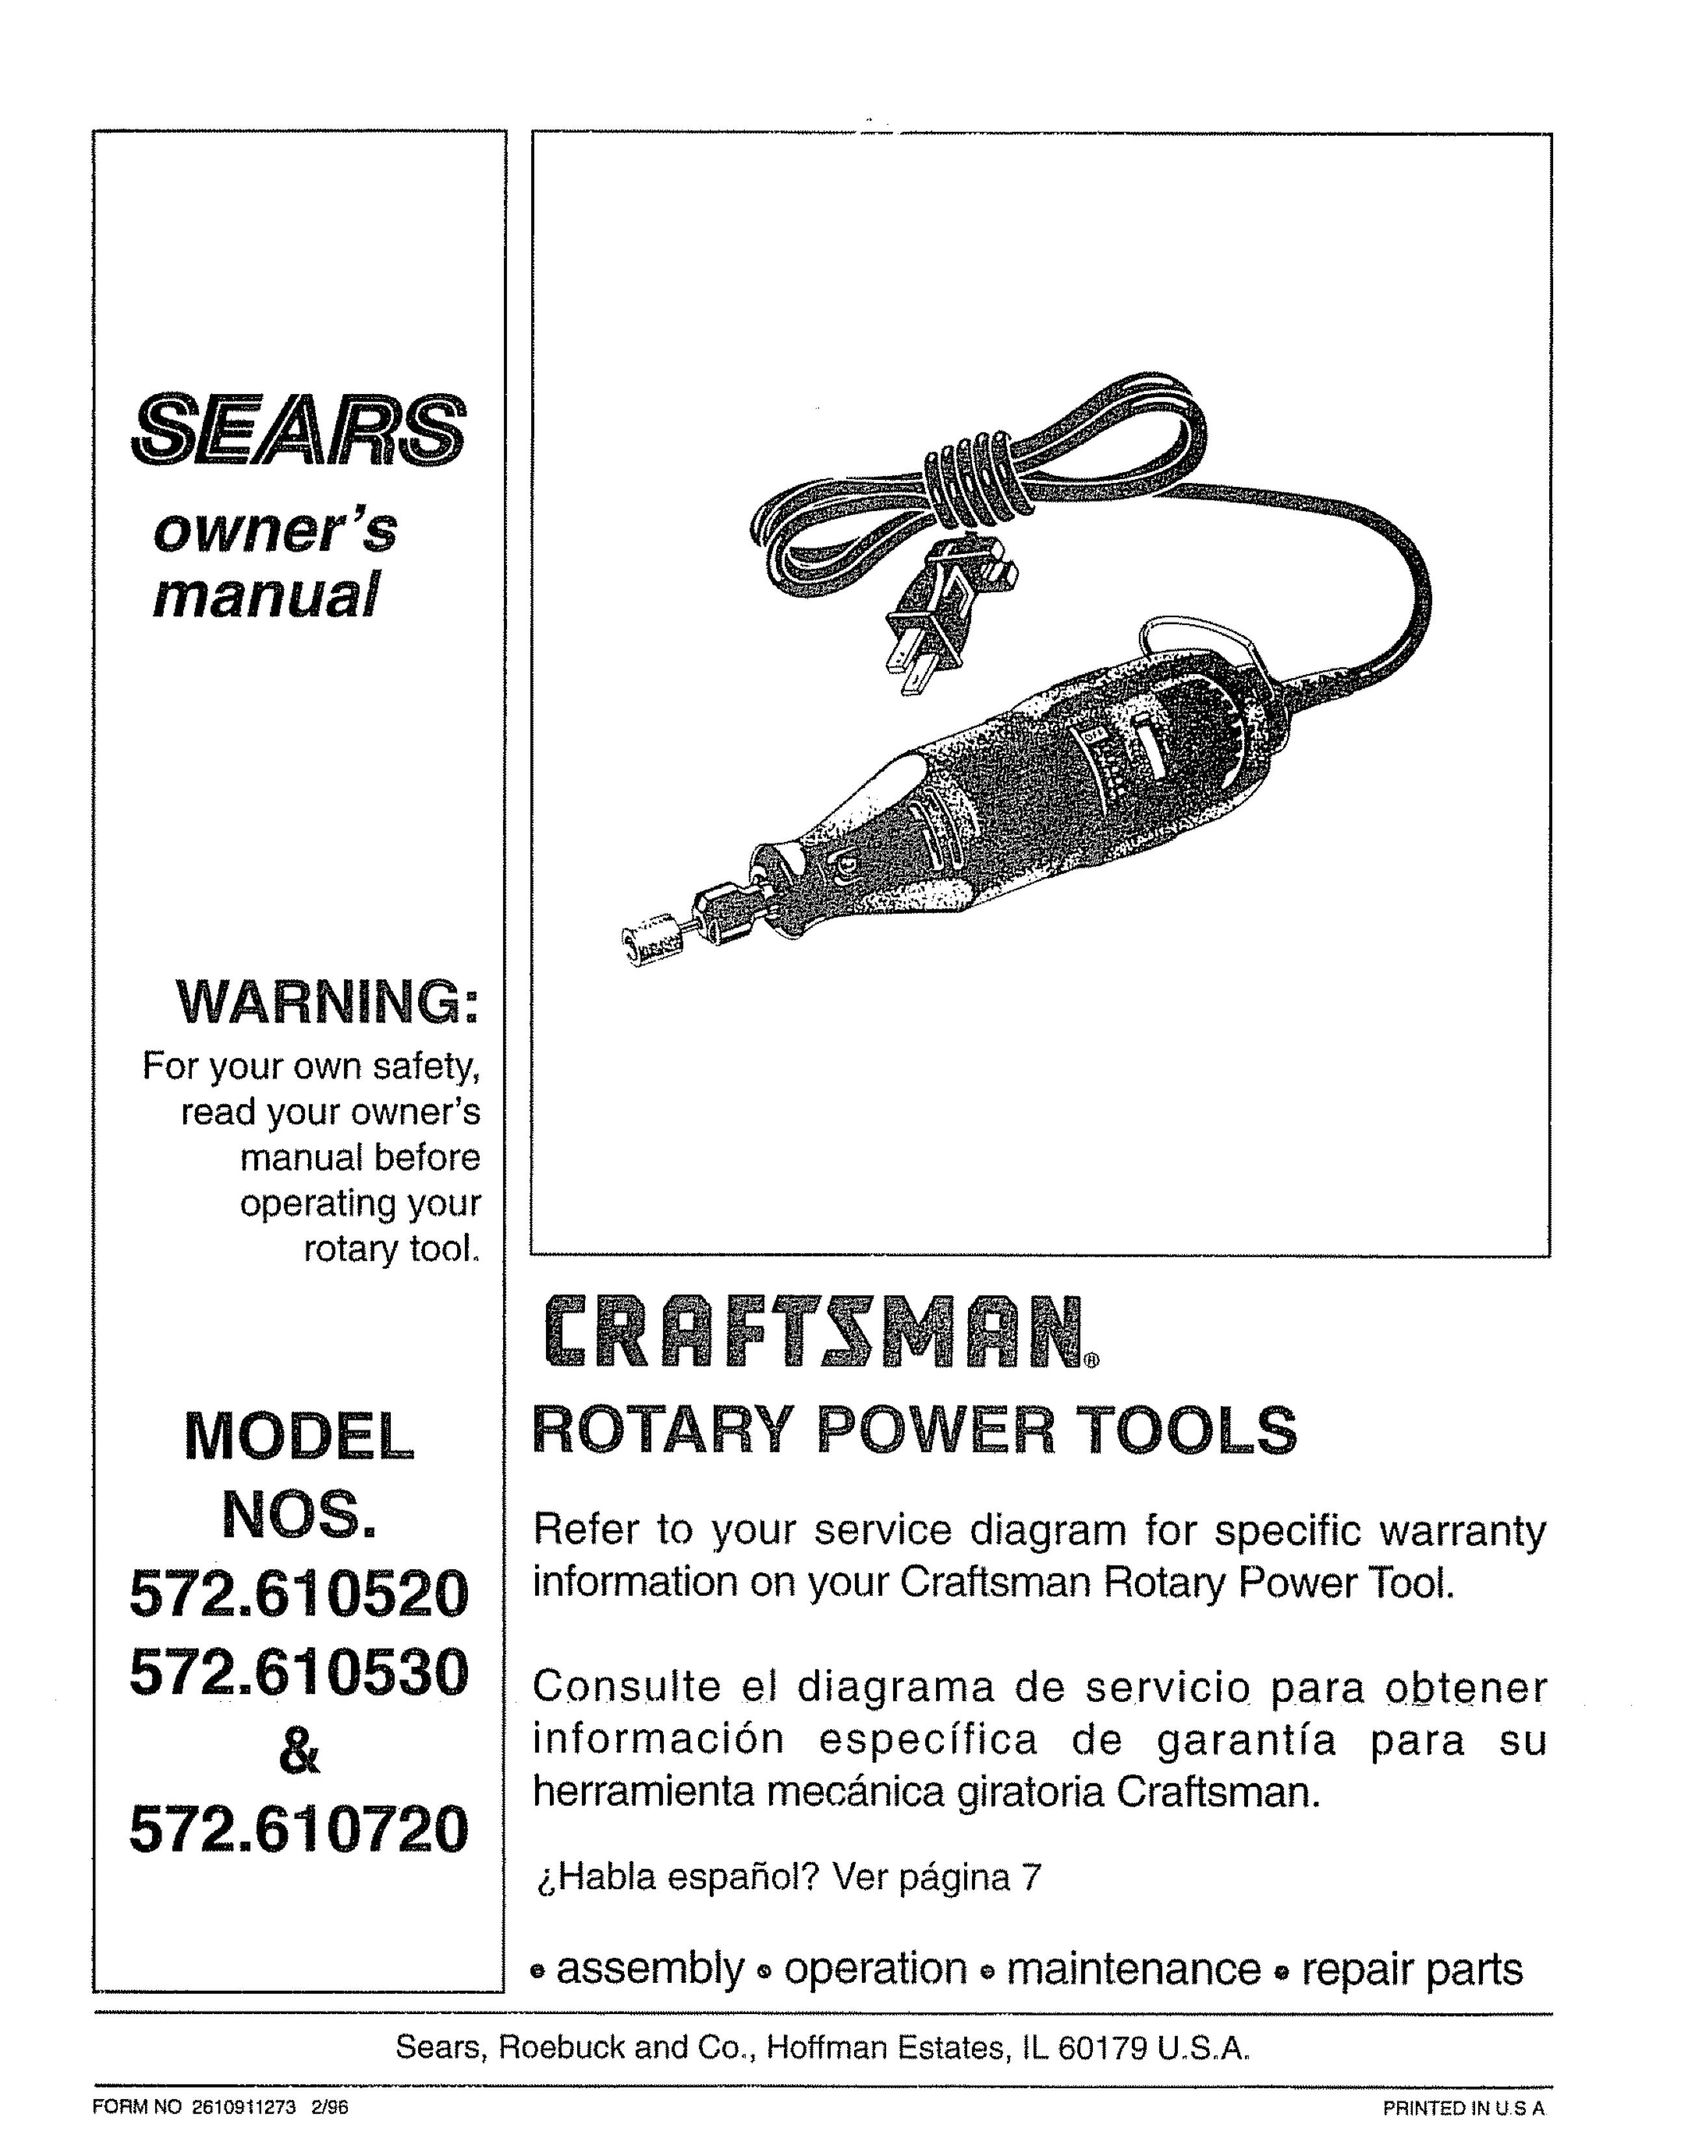 Craftsman 572.610530 Drill User Manual